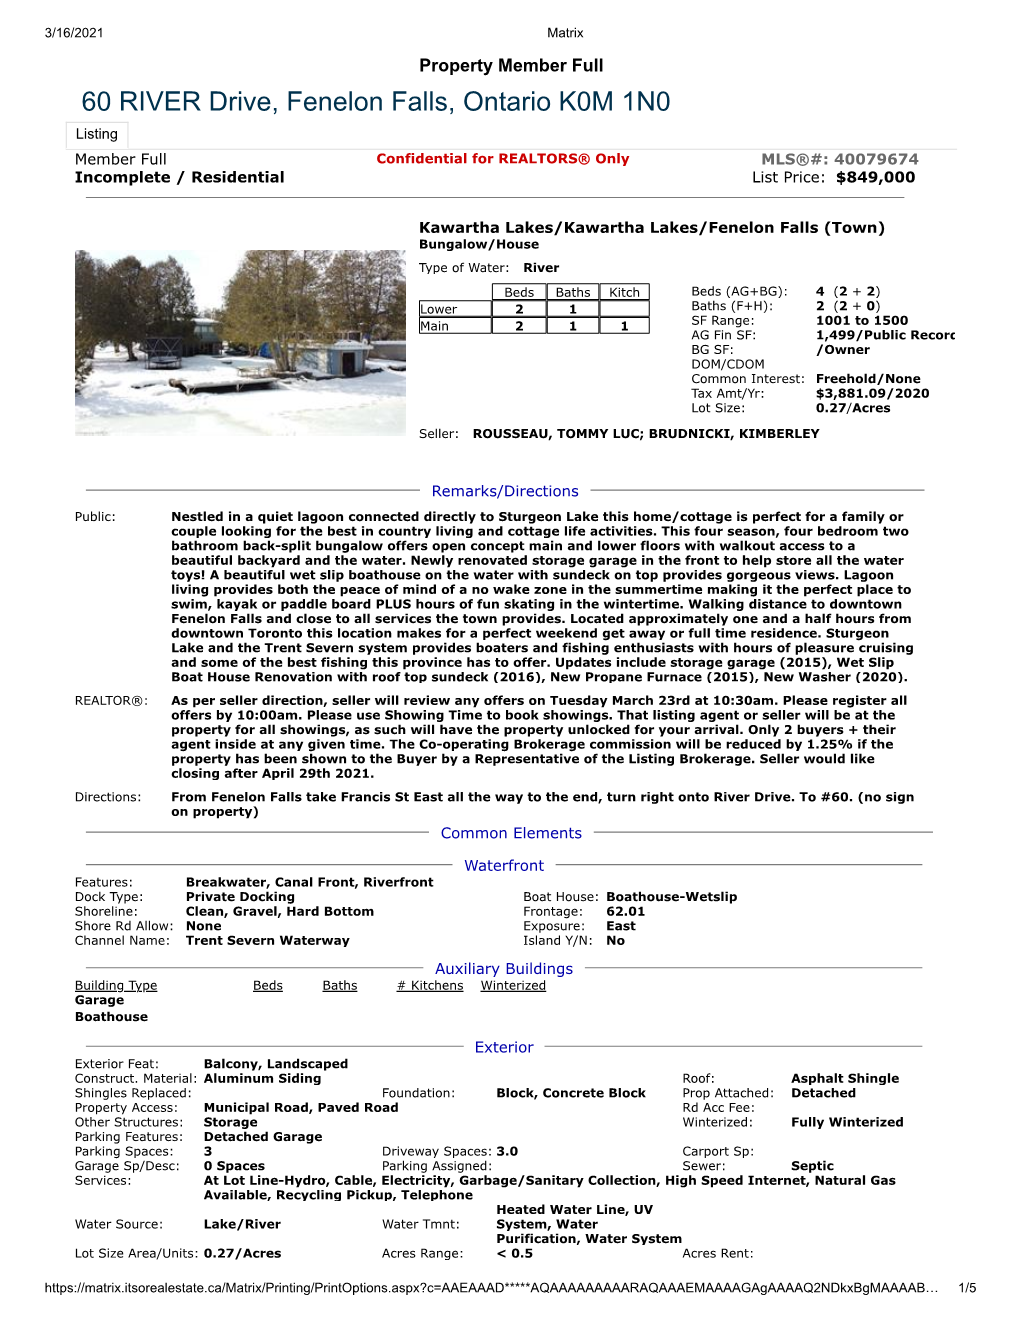 60 RIVER Drive, Fenelon Falls, Ontario K0M 1N0 Listing Member Full Confidential for REALTORS® Only MLS®#: 40079674 Incomplete / Residential List Price: $849,000